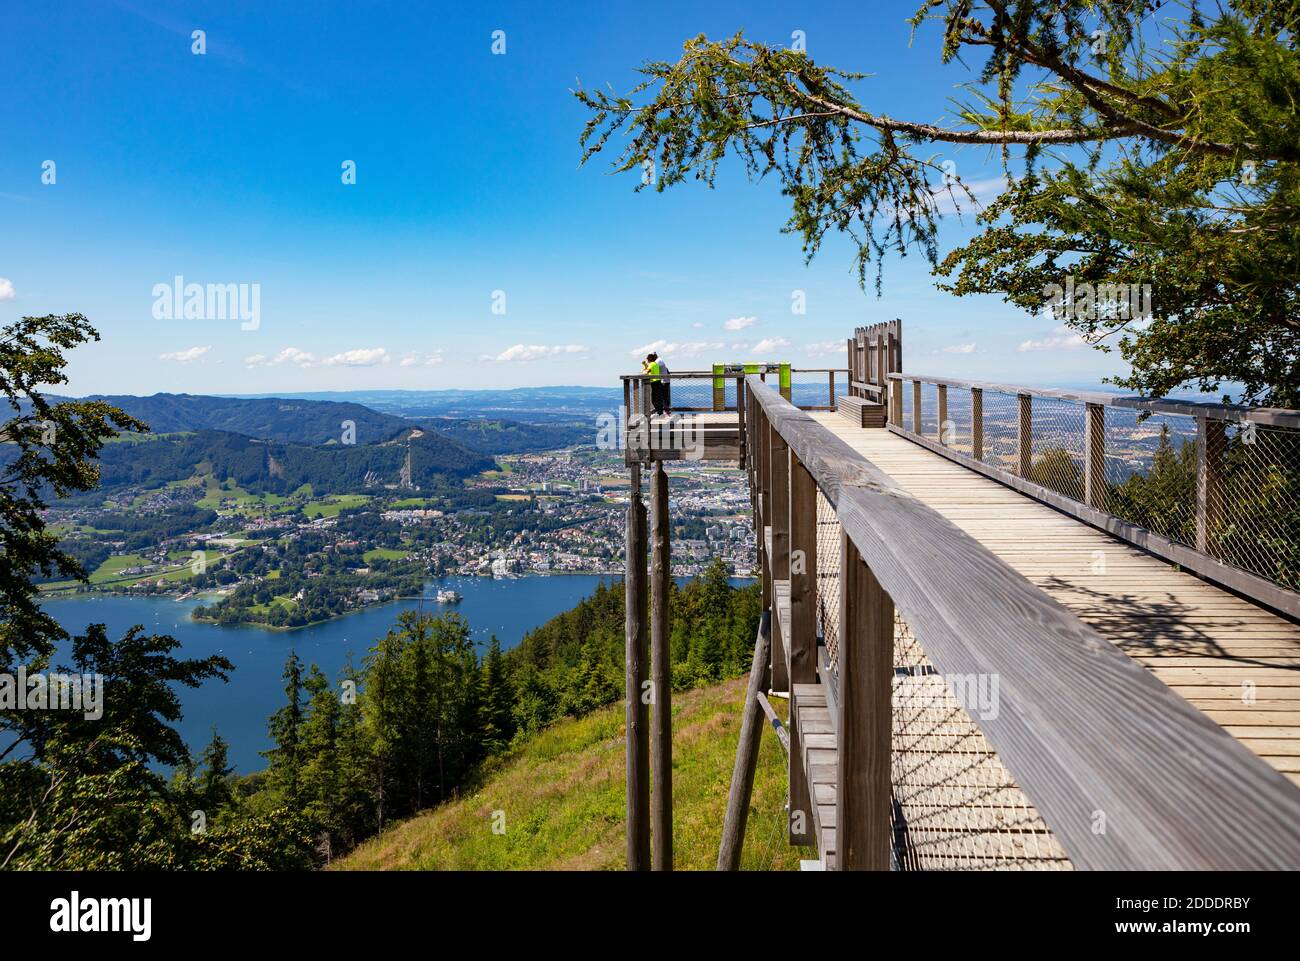 Austria, Upper Austria, Gmunden, Observation platform on summit of Grunberg mountain with lakeshore town in background Stock Photo